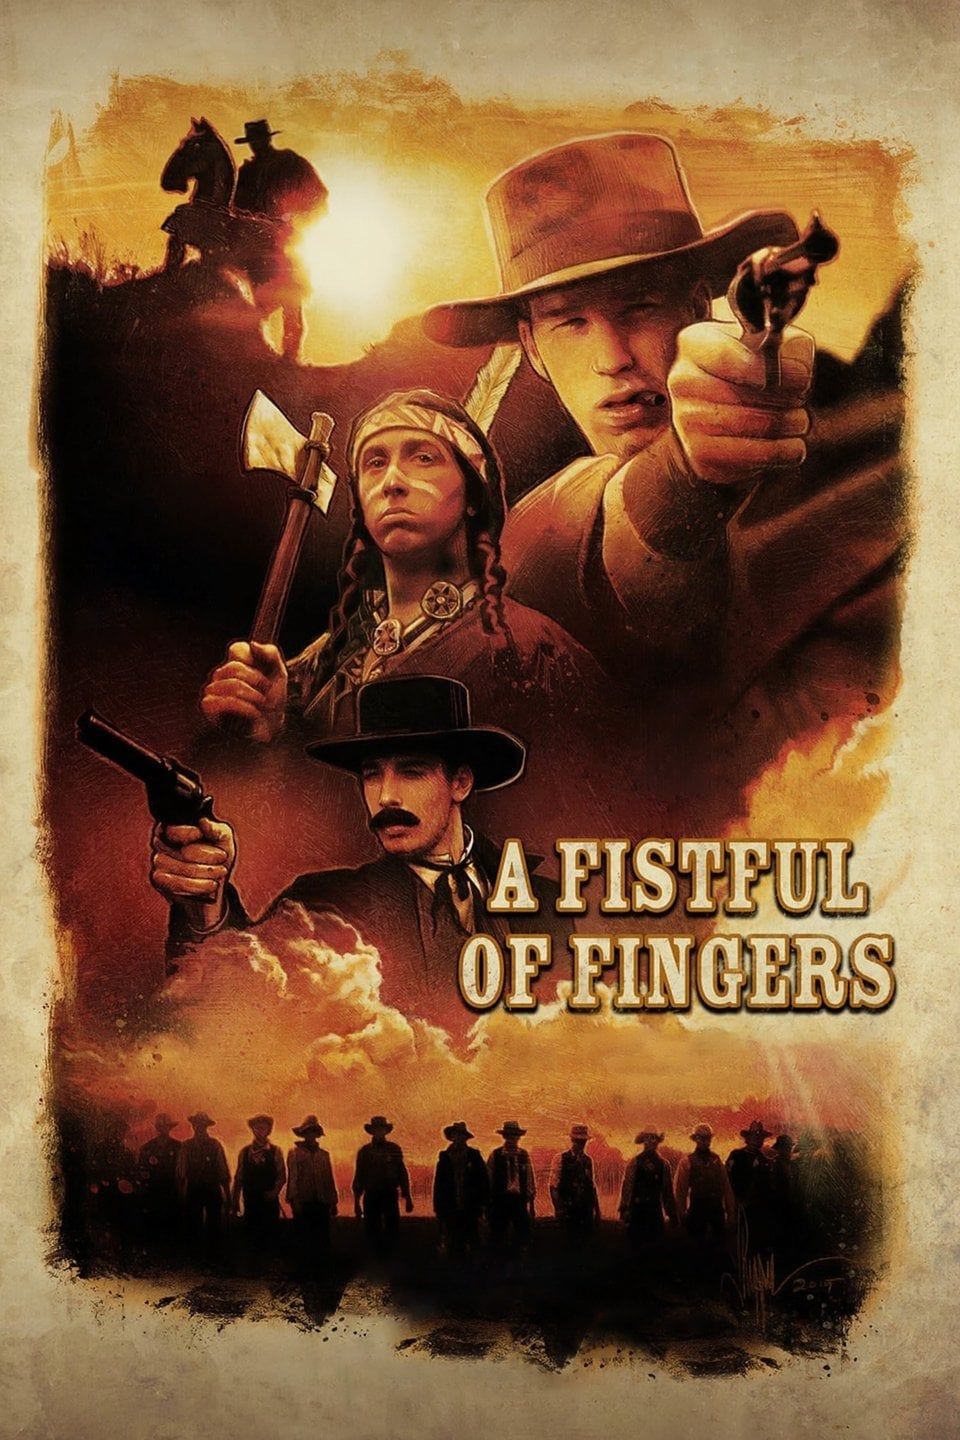 Fistful of Fingers